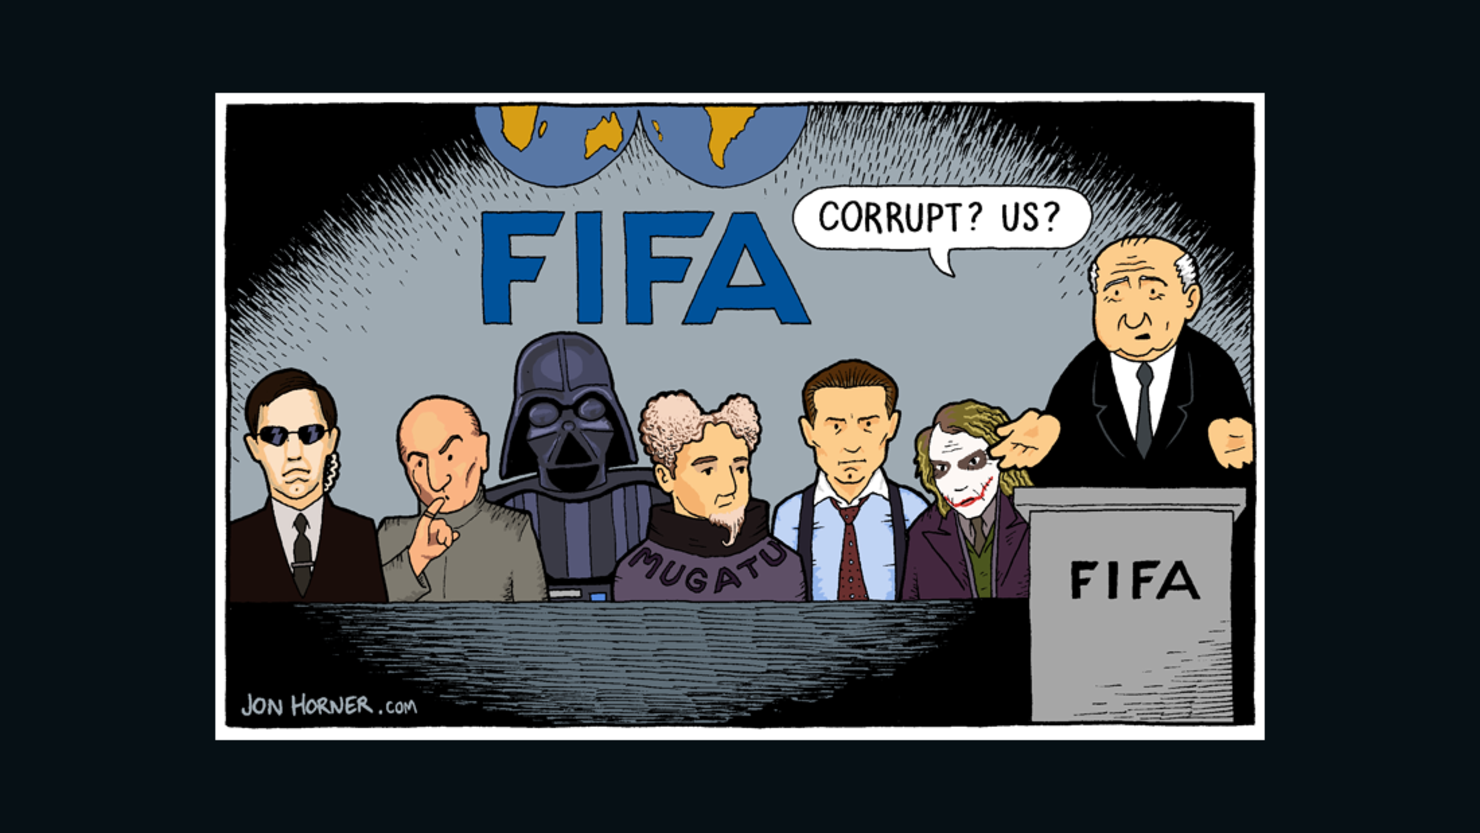 Cartoonist Jon Horner's interpretation of the FIFA scandal. 